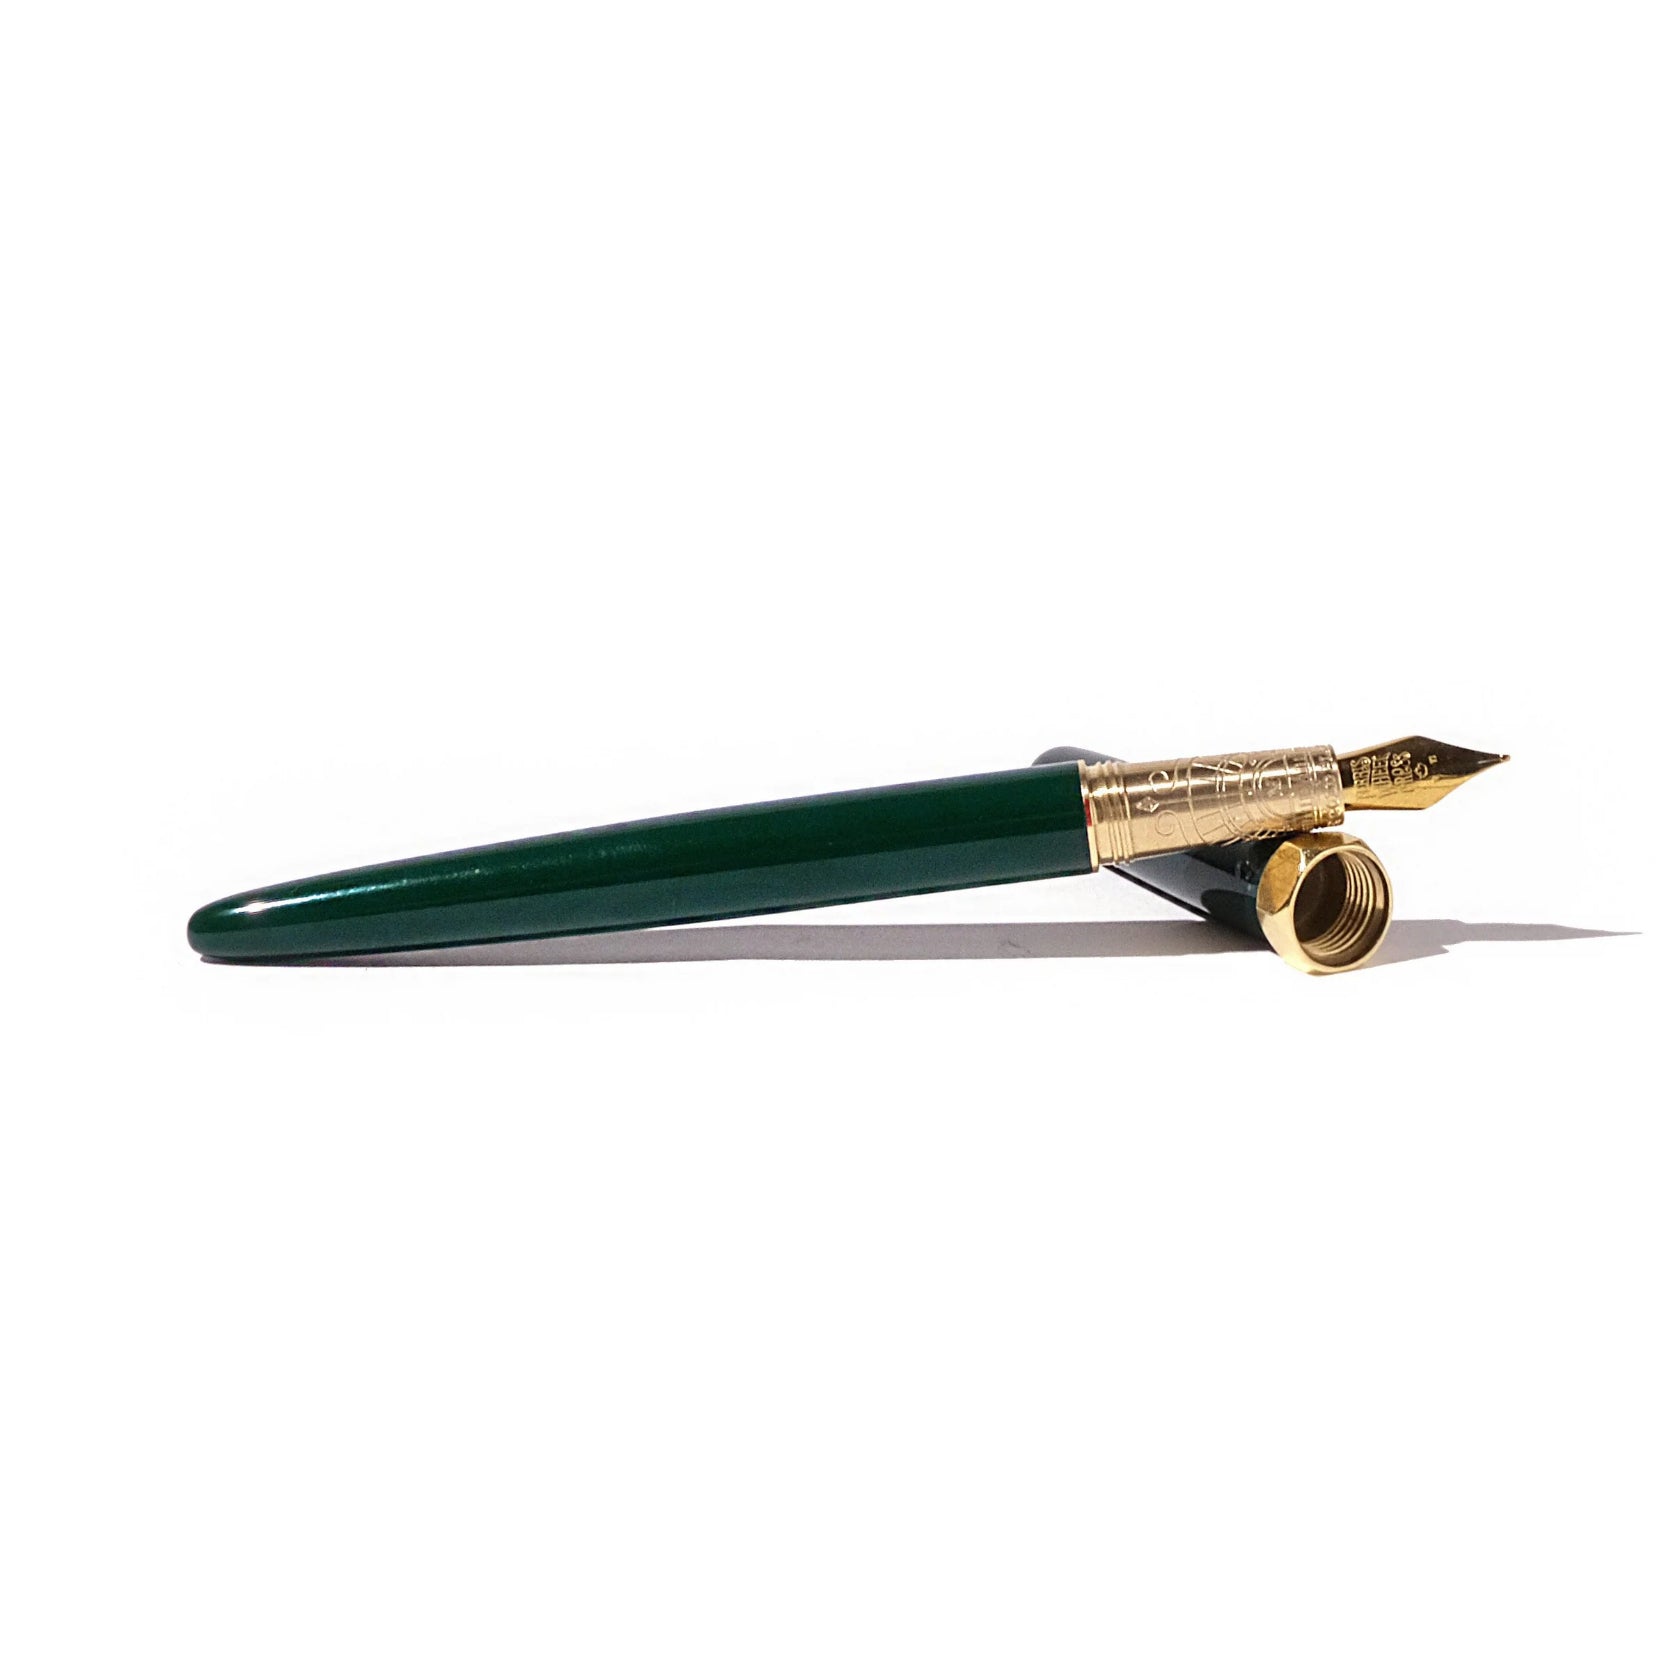 FERRIS WHEEL PRESS Brush Gold Plated Nib Fountain Pen-M Lord Evergreen Default Title